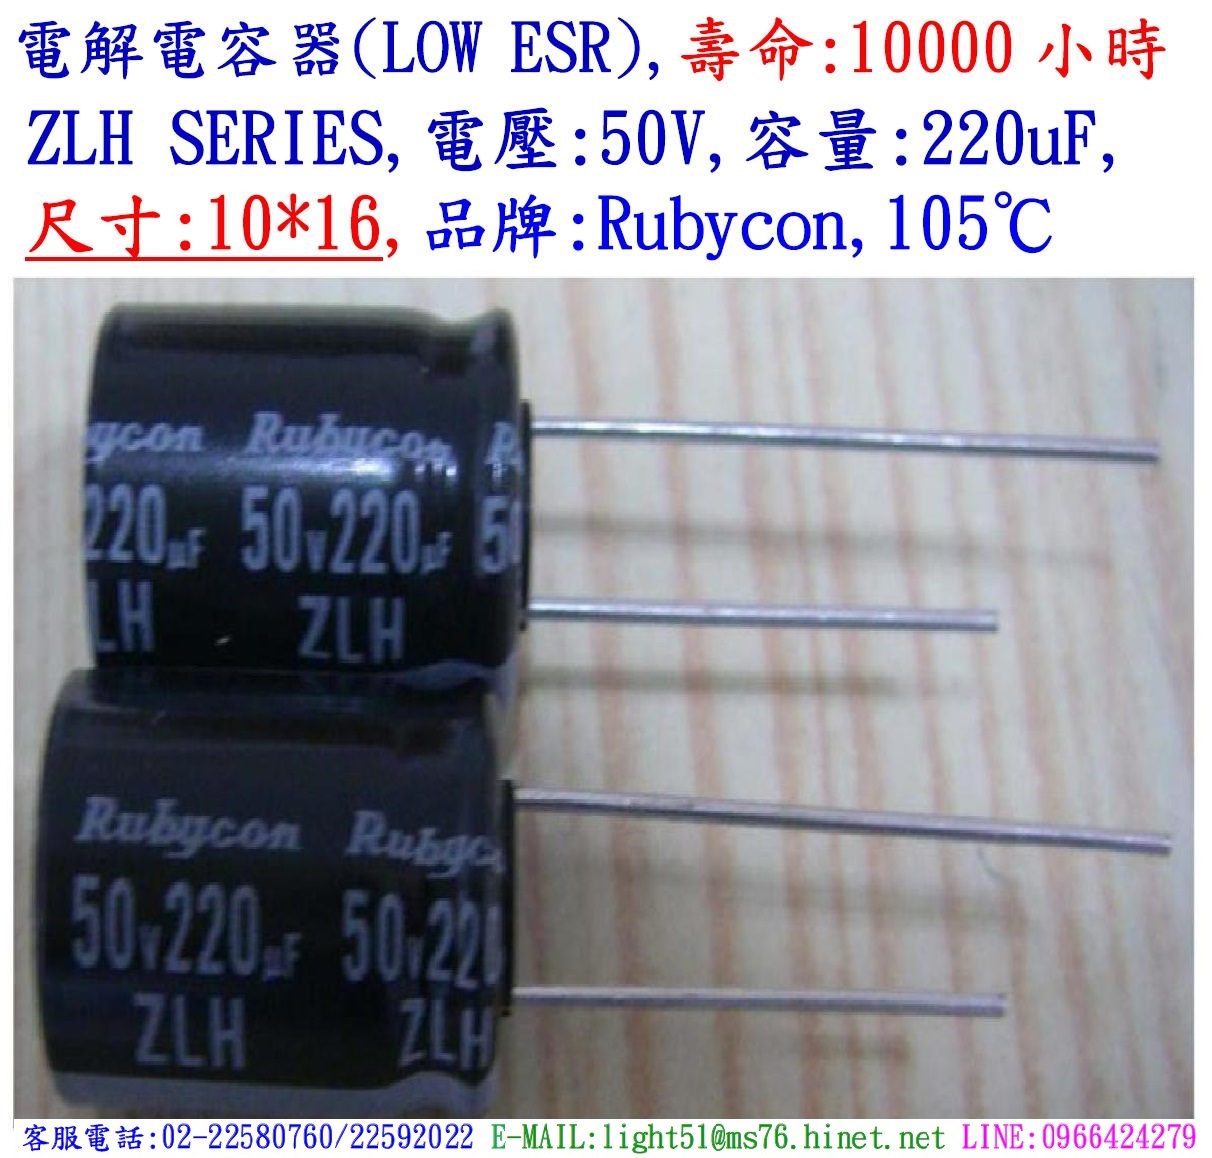 ZLH,50V,220uF,尺寸:10*16,電解電容器(LOW ESR),壽命:10000小時,Rubycon